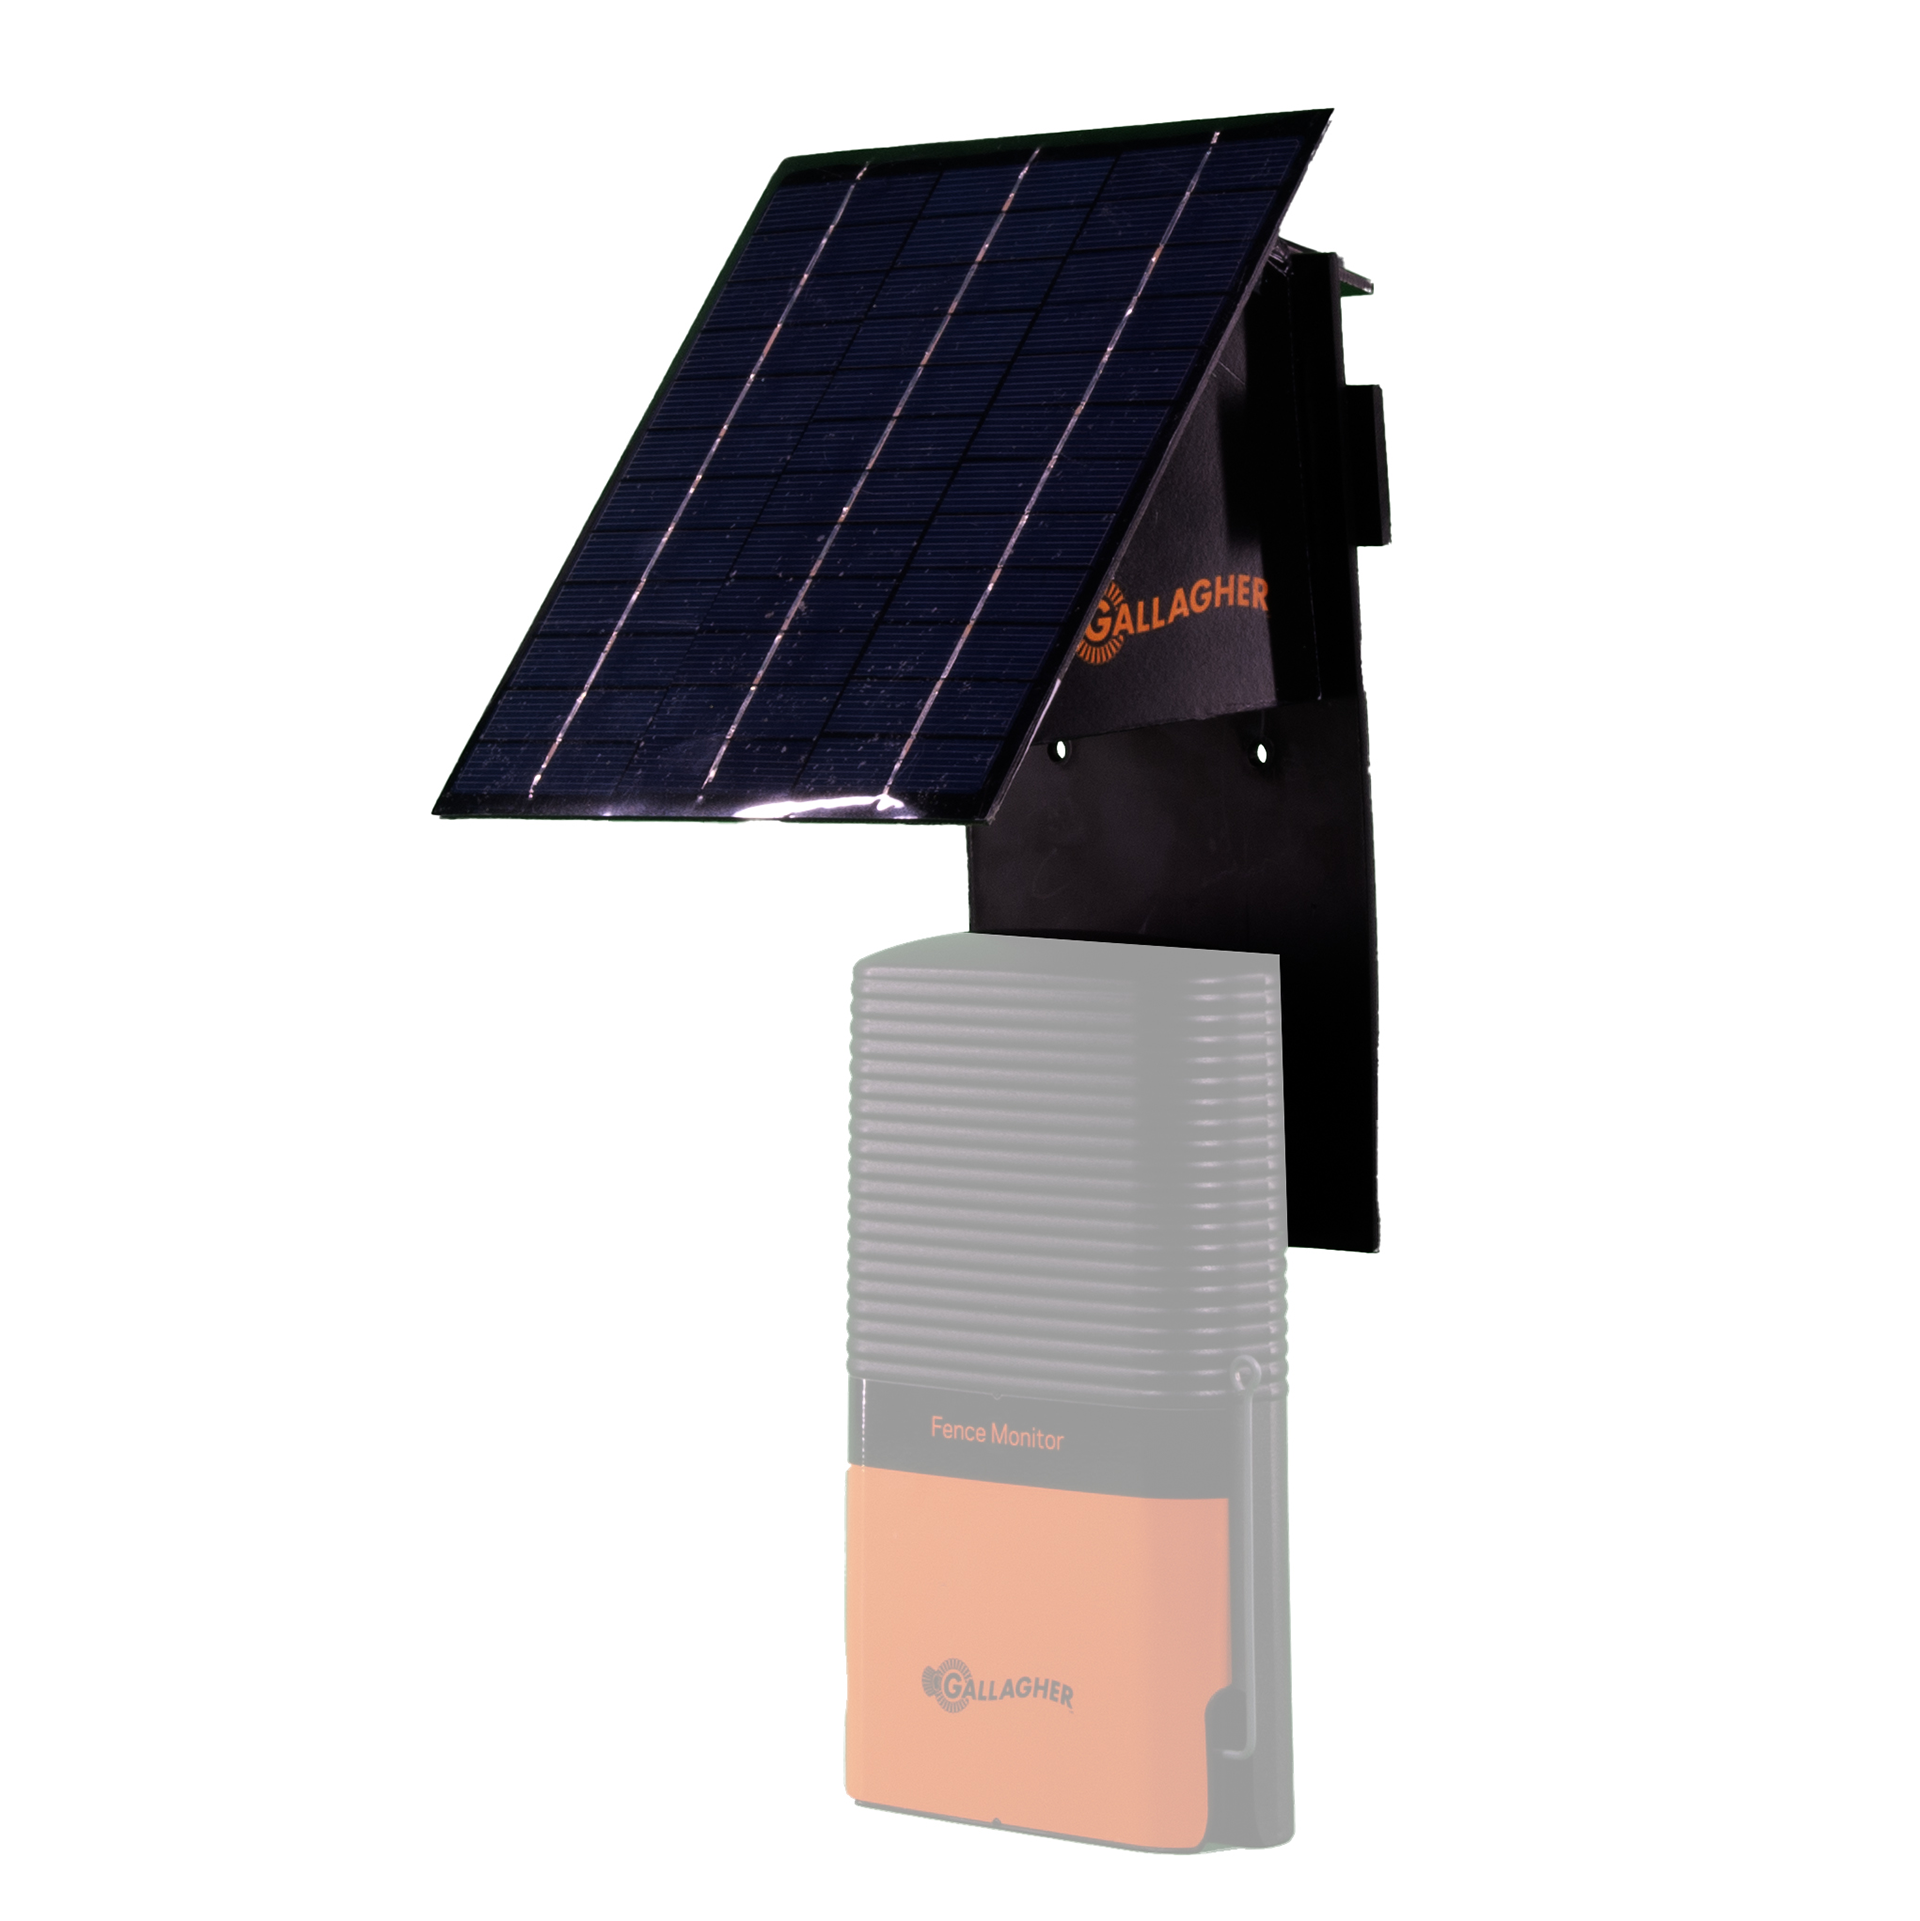 Solar assist fence monitor